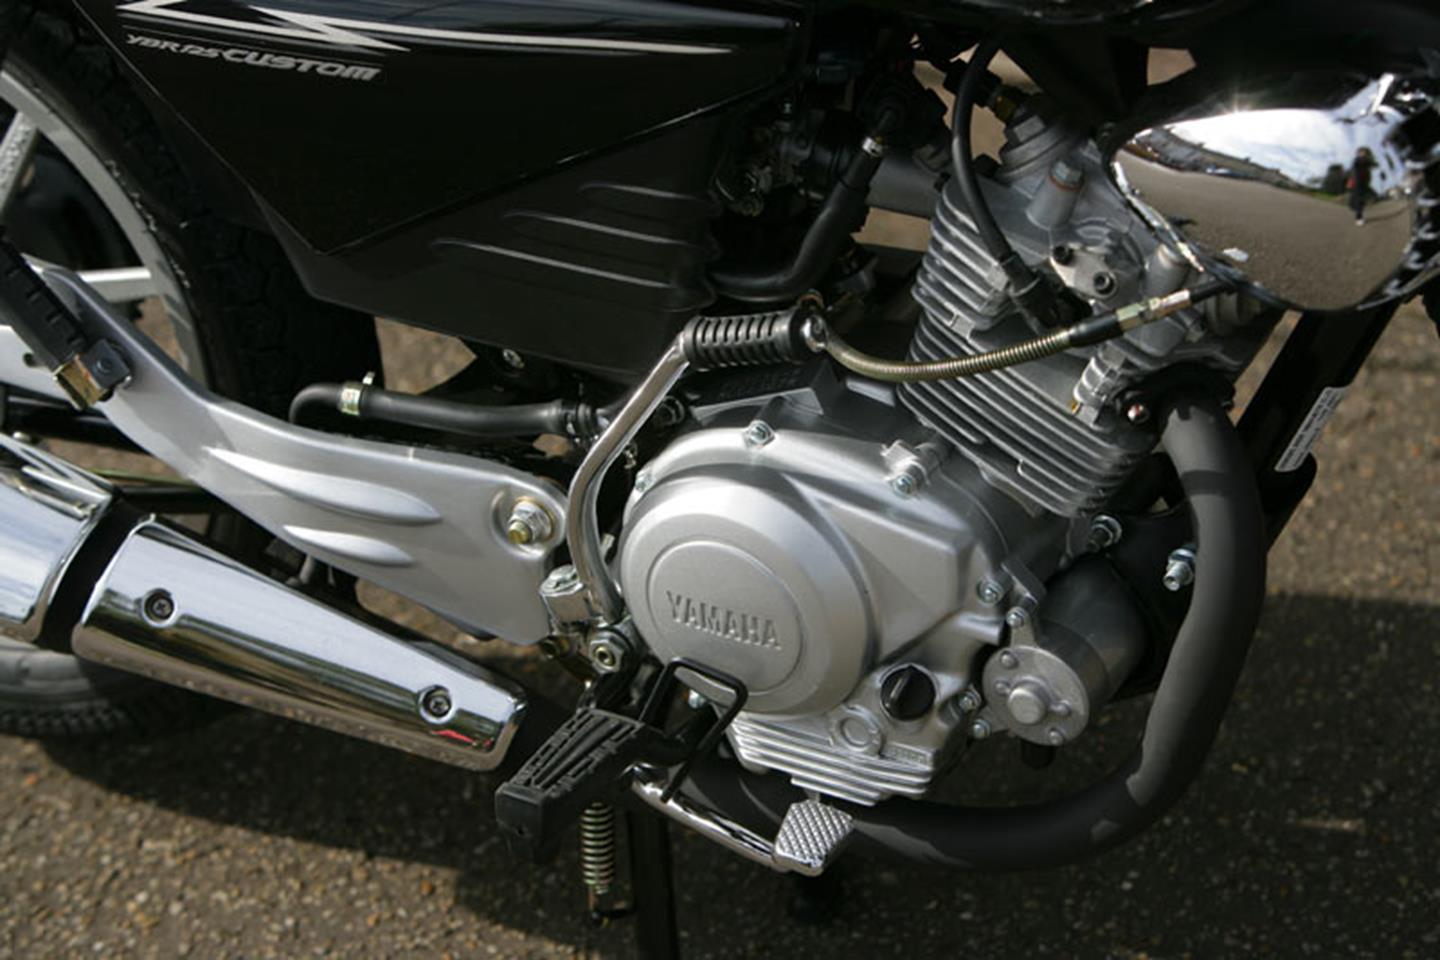 The Yamaha YBR 125 Custom's engine